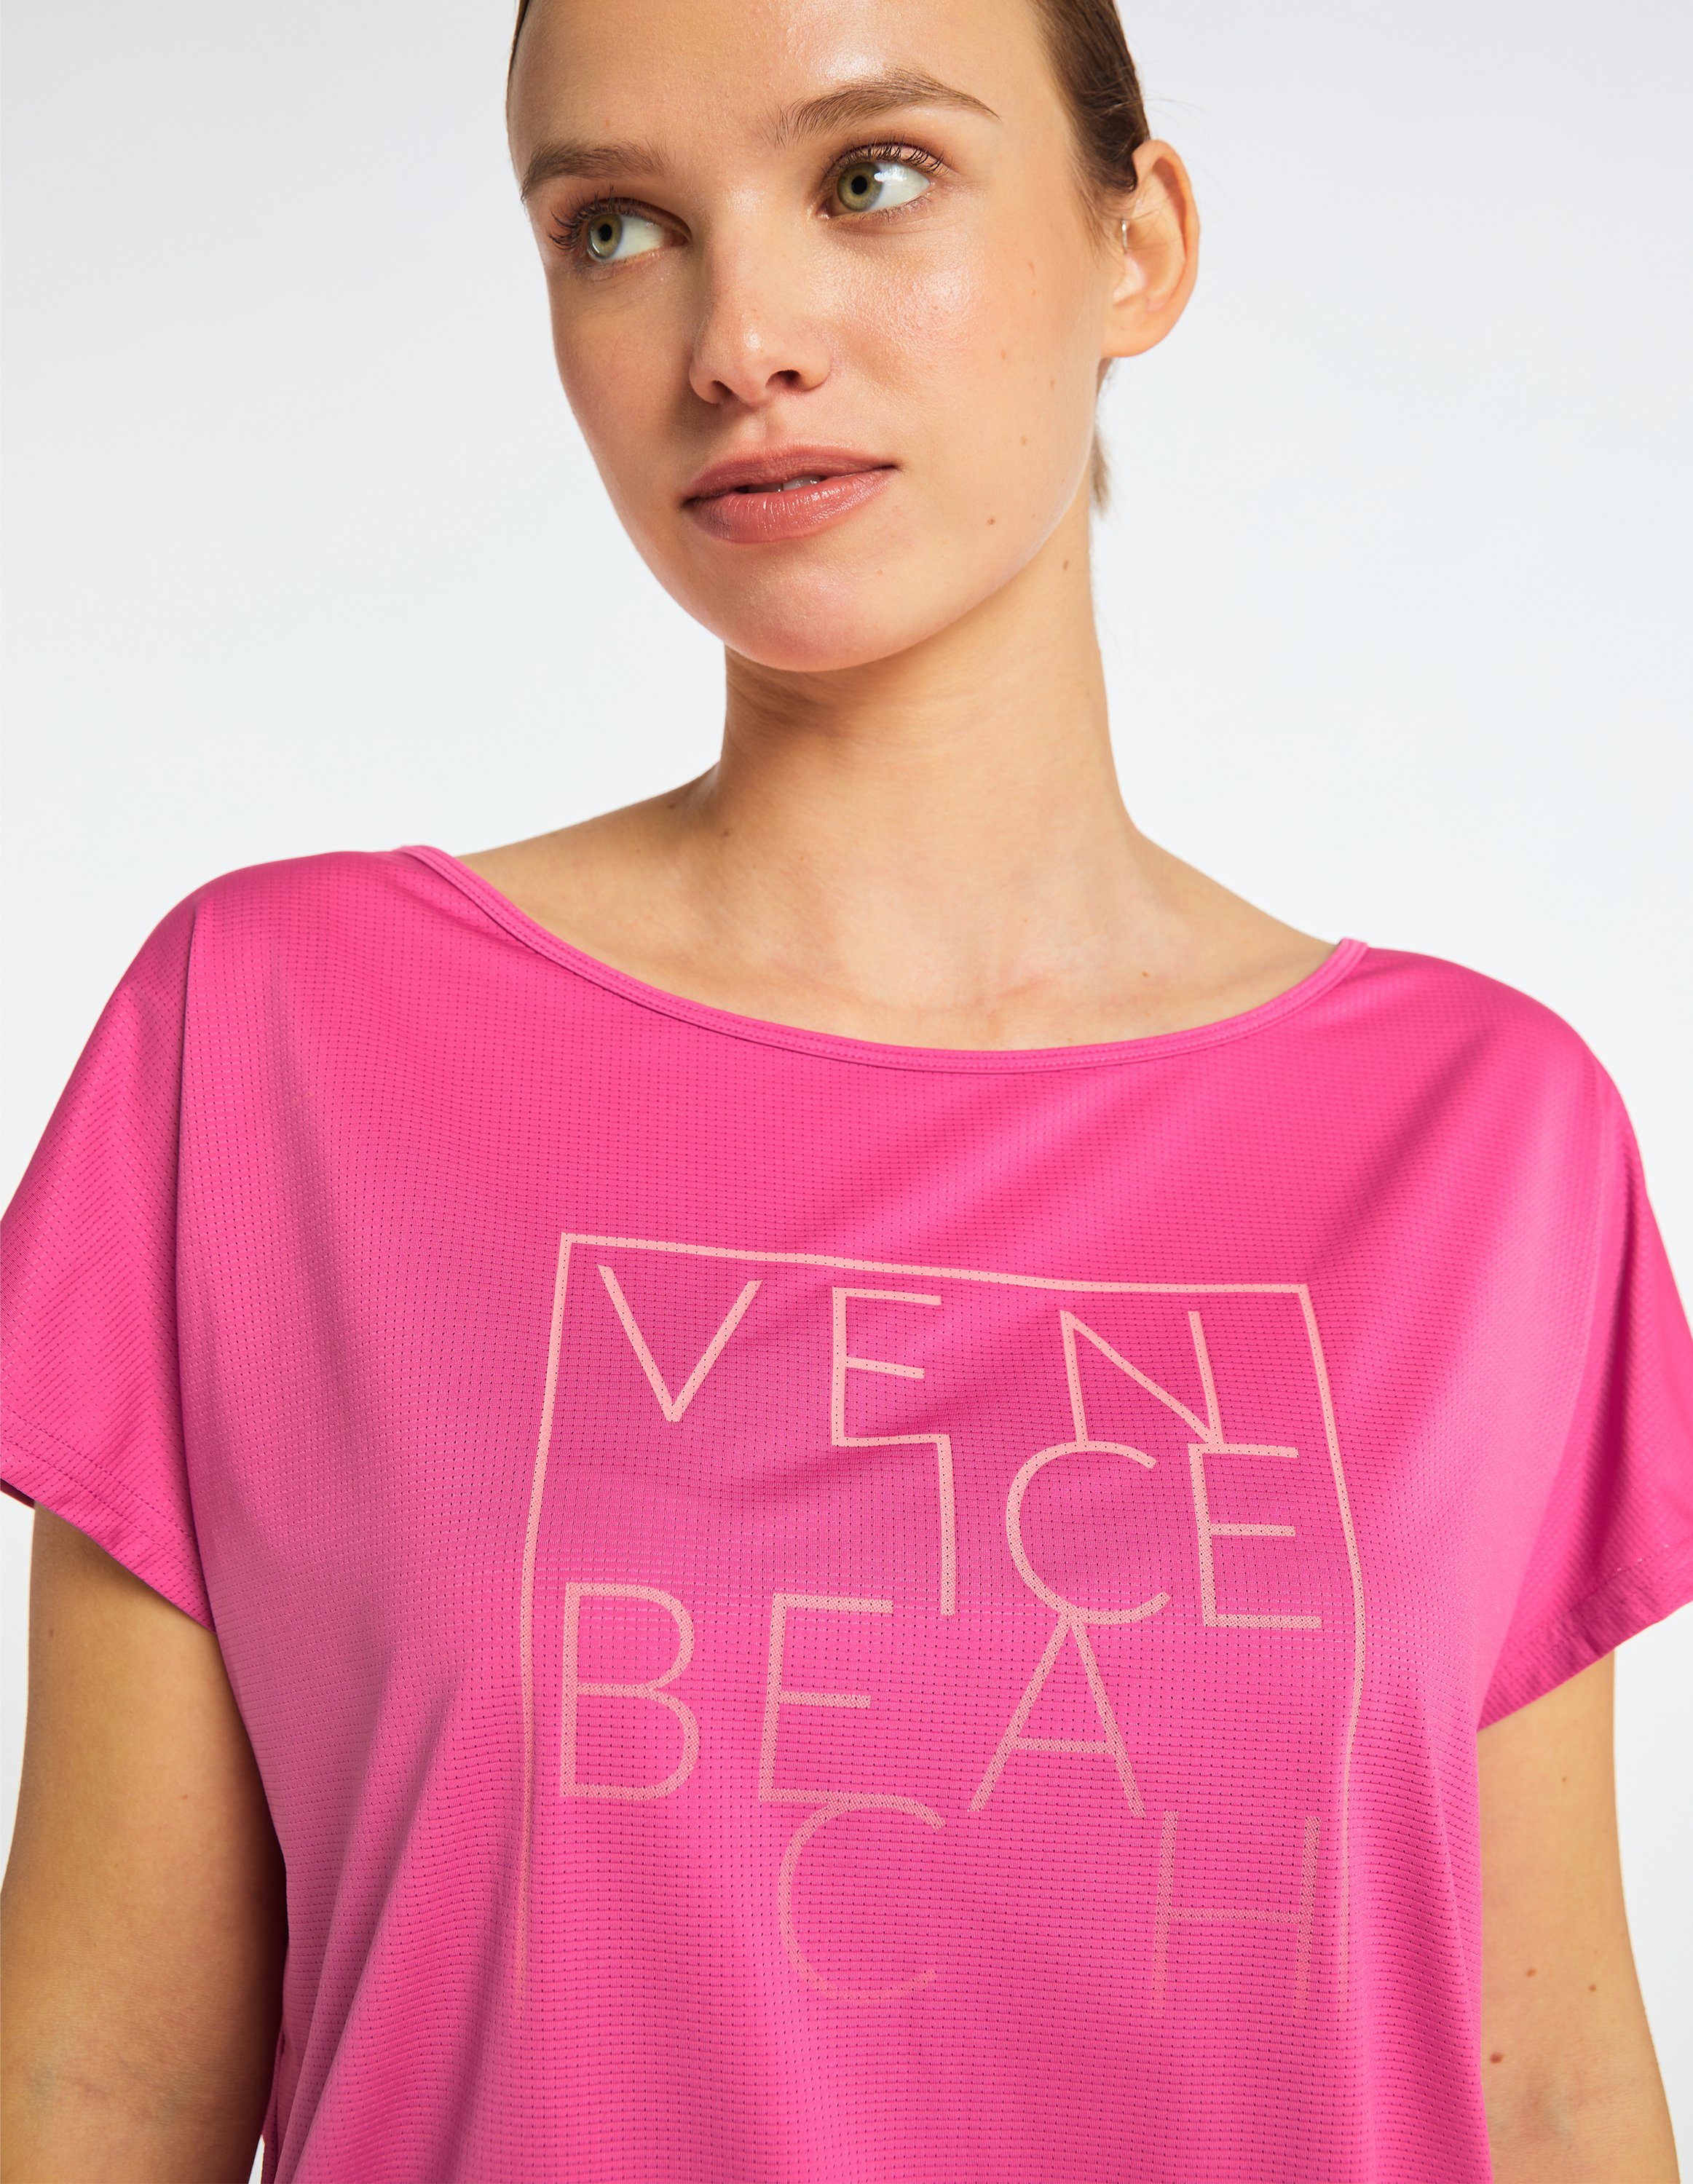 Venice Beach T-Shirt T-Shirt VB MIA